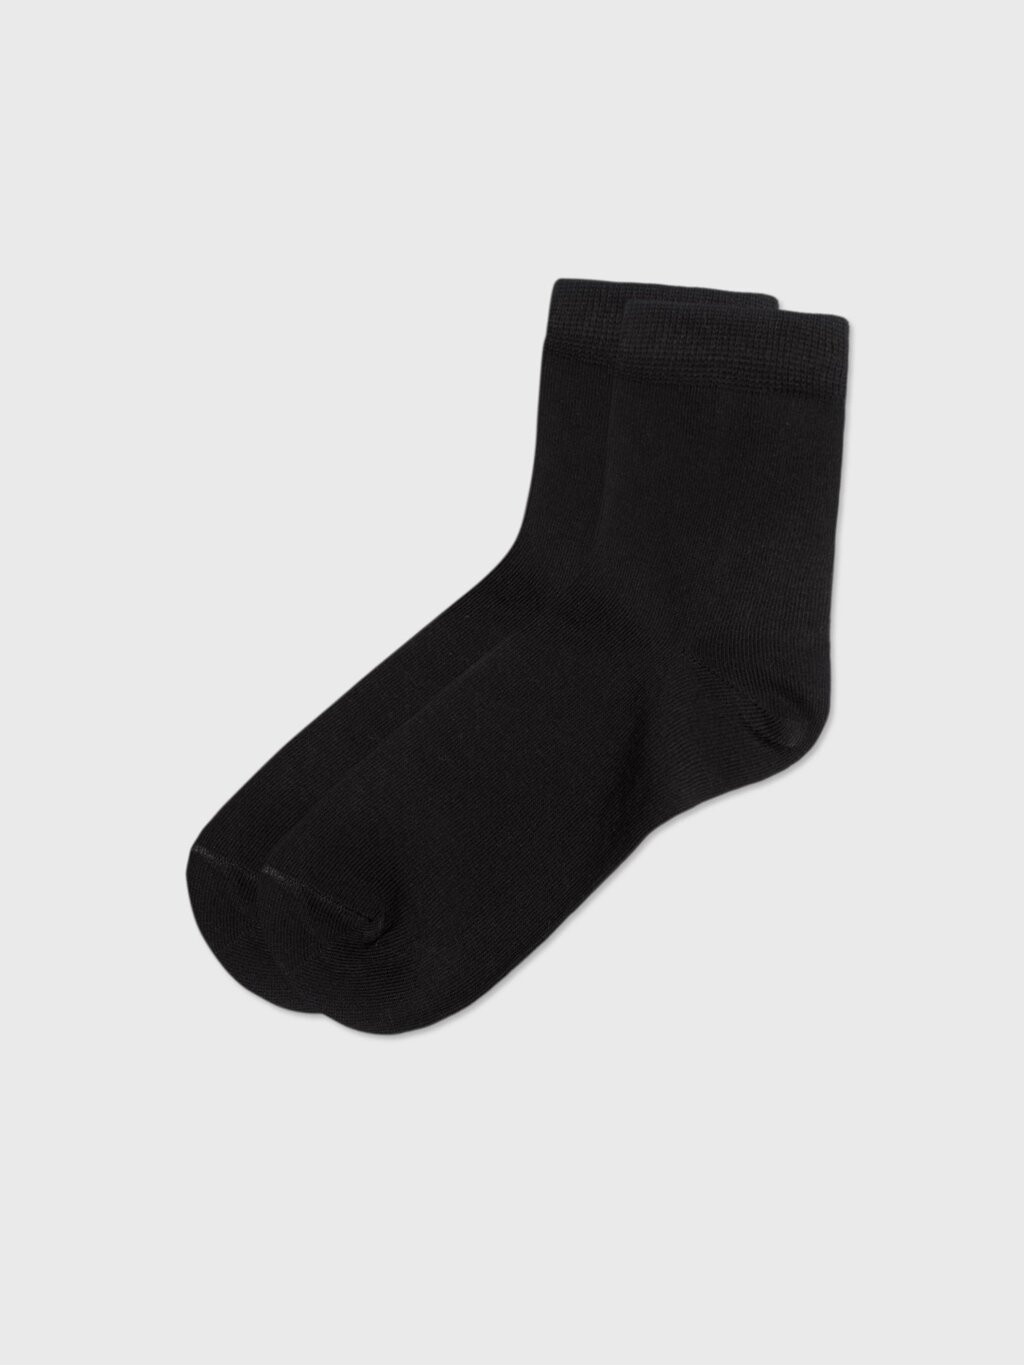 Носки черные (38-40) от компании Admi - фото 1